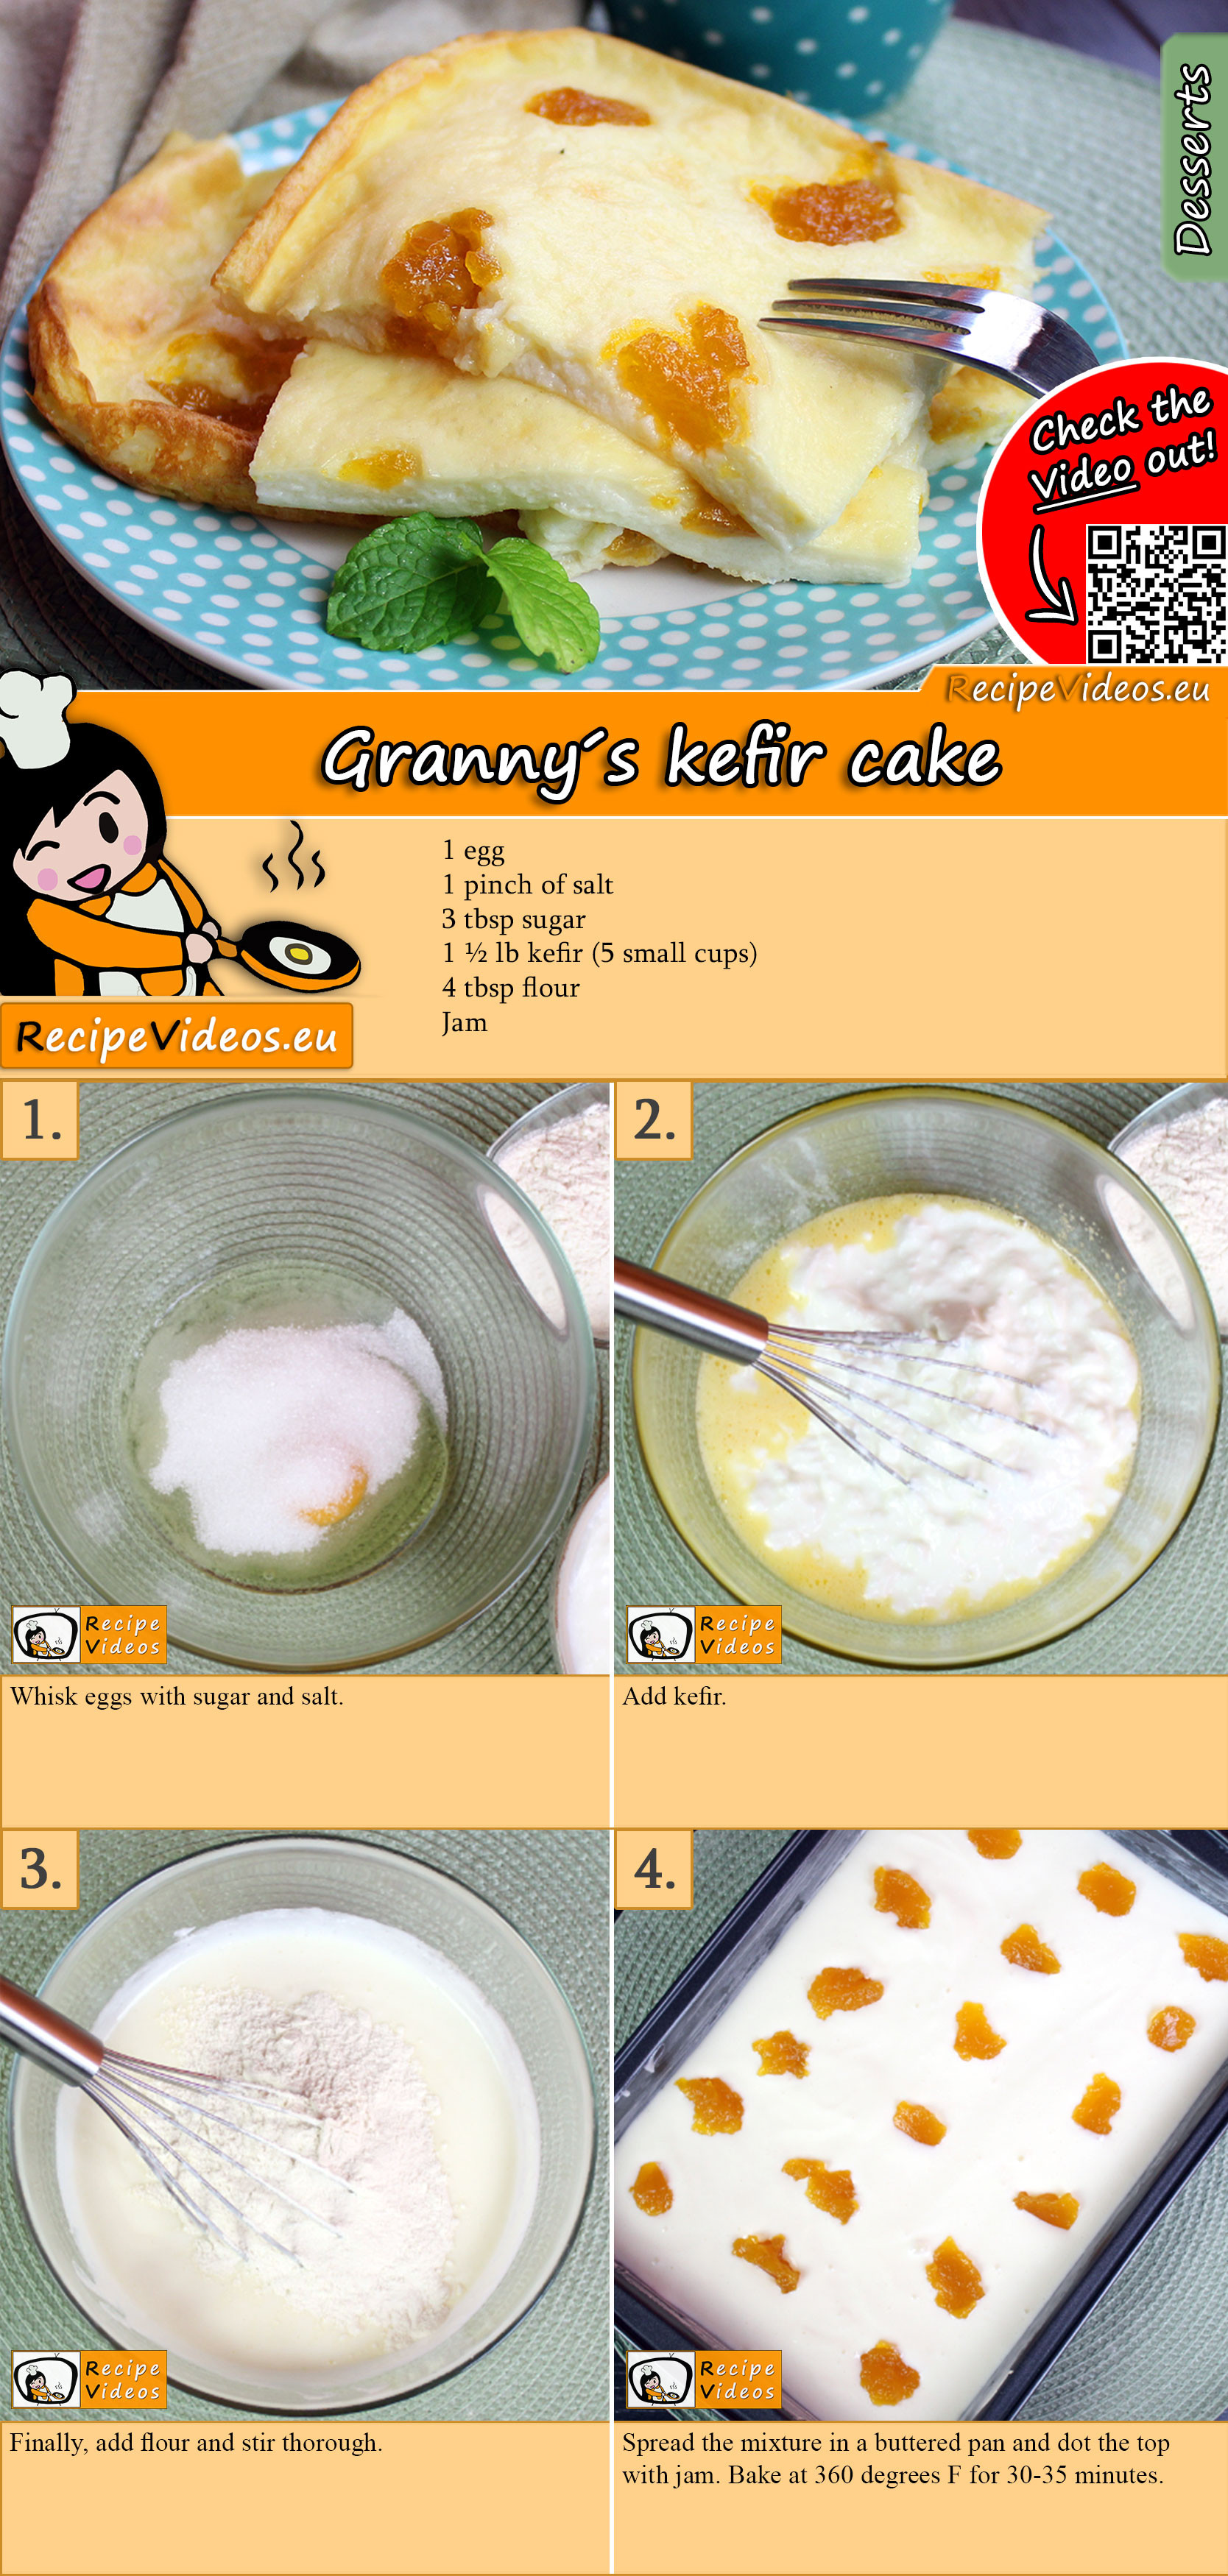 Granny’s kefir cake recipe with video